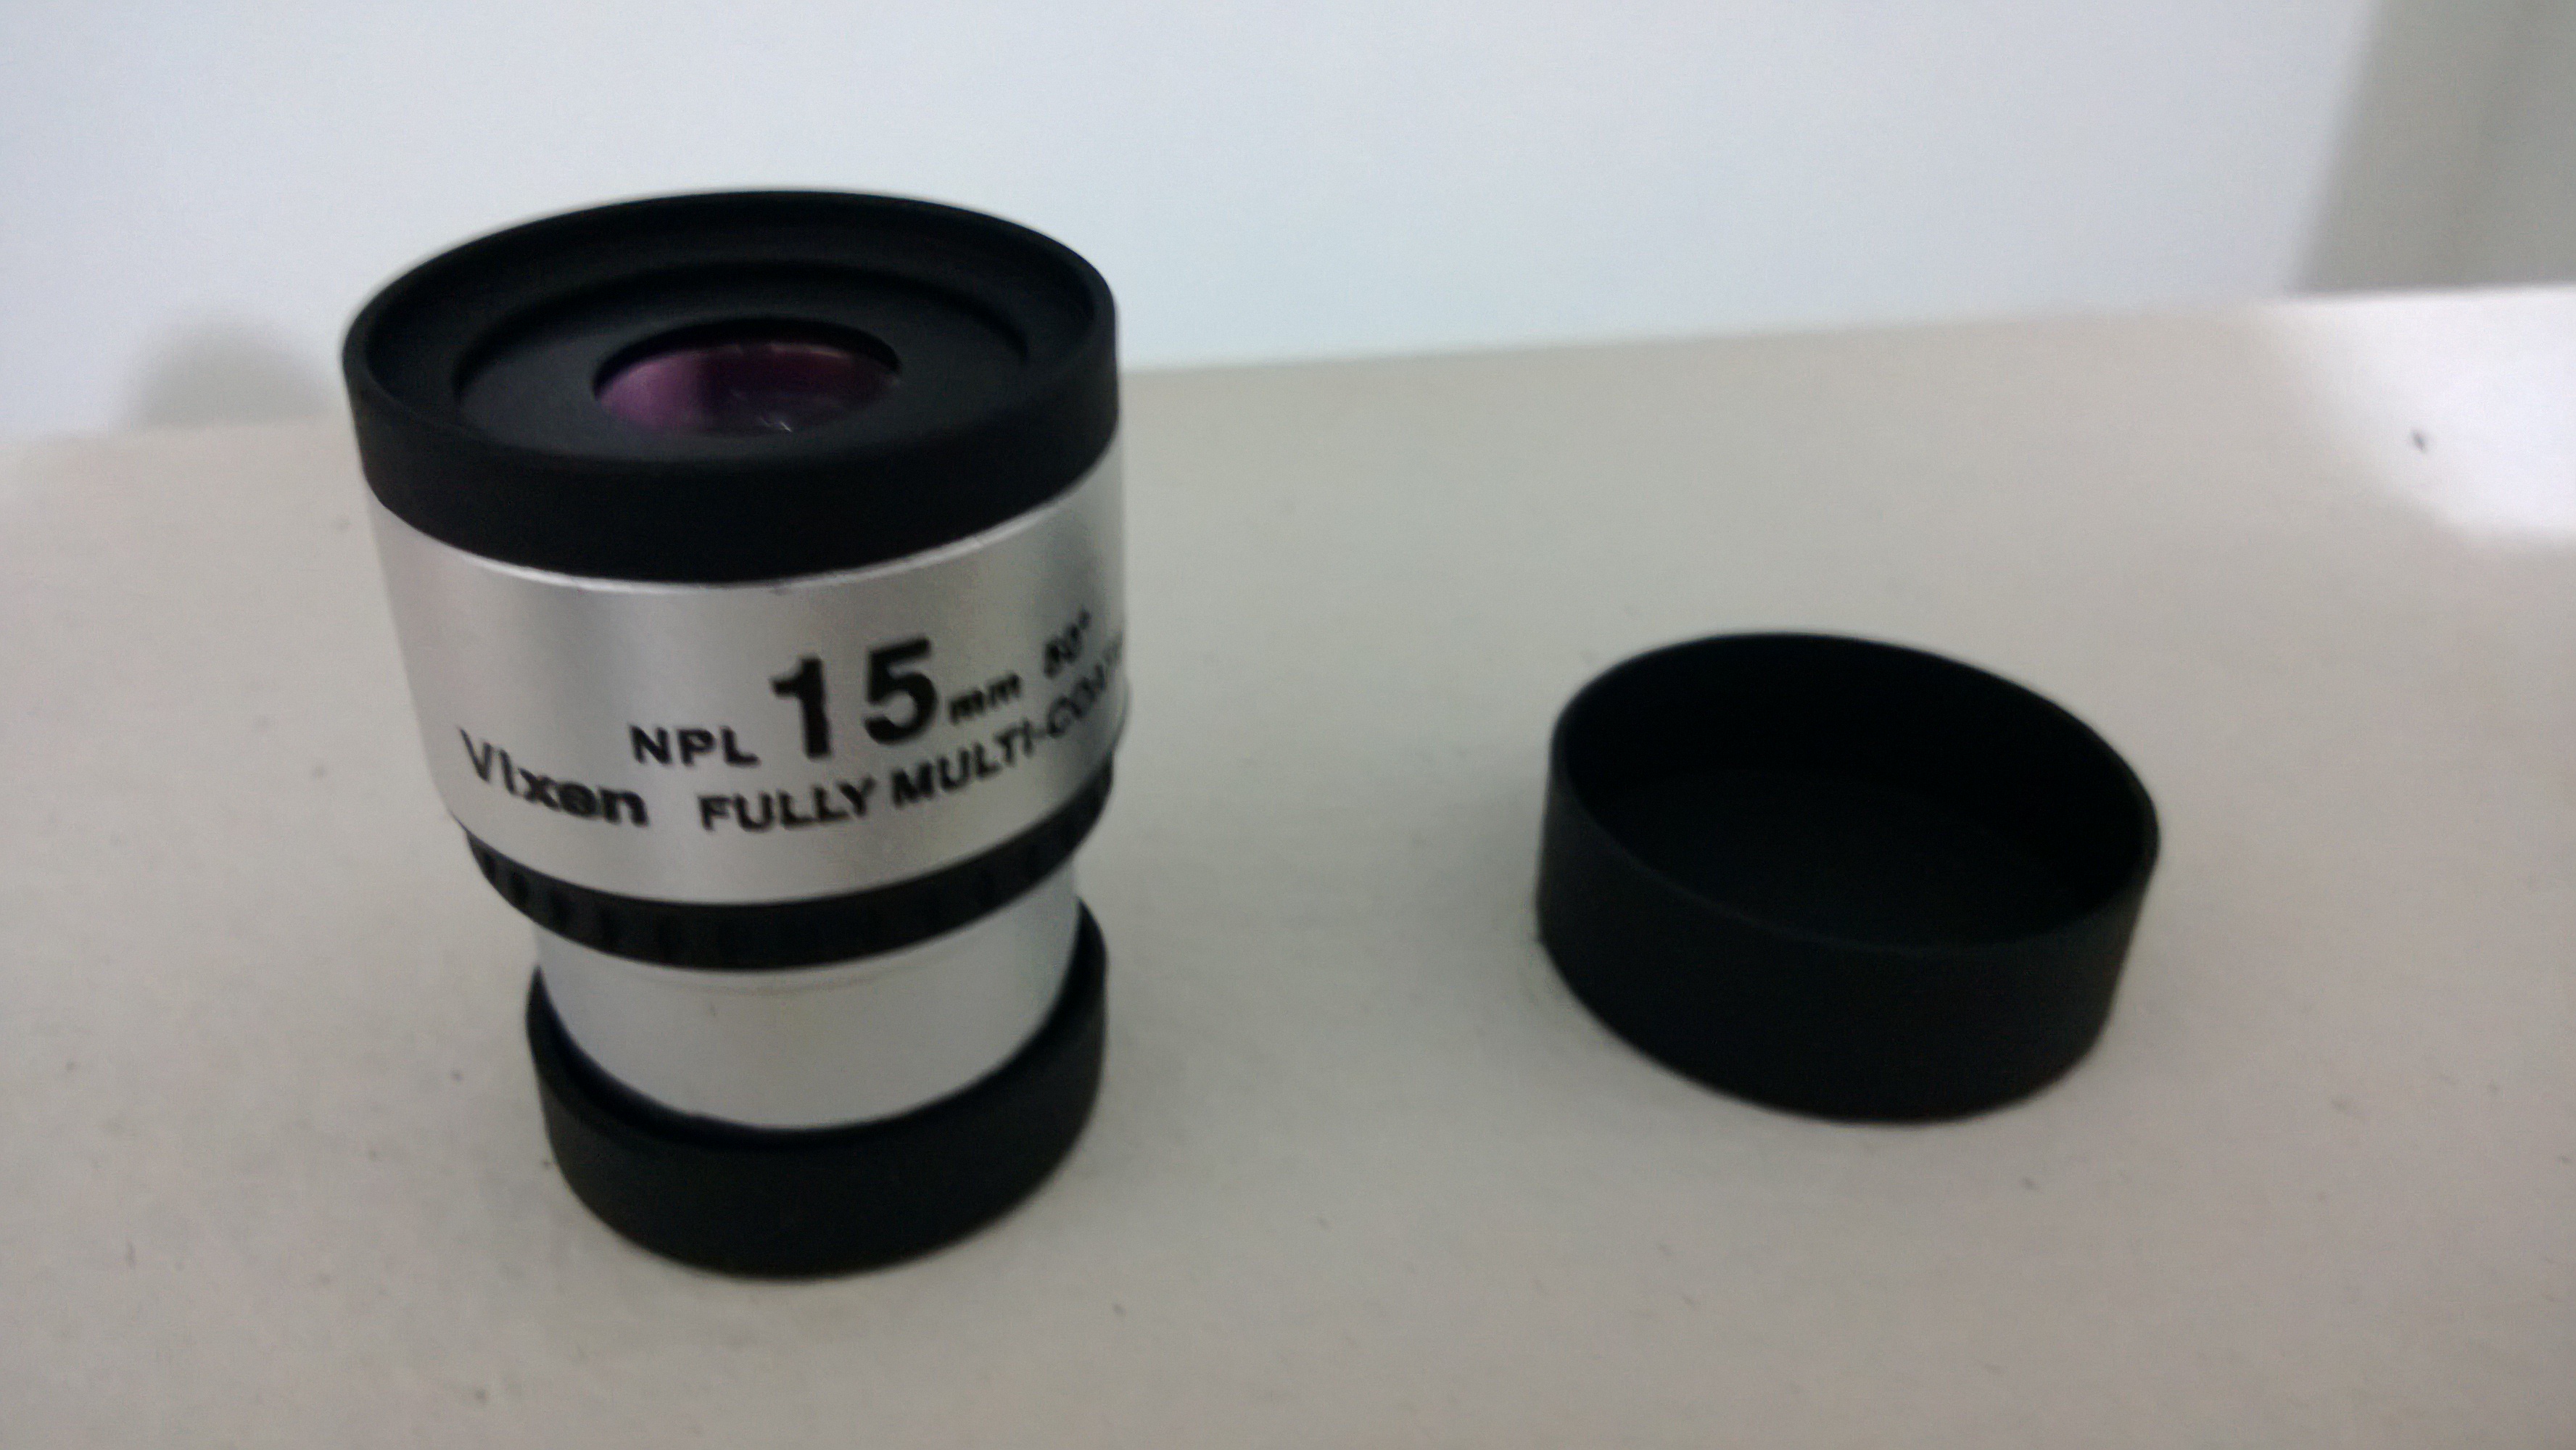 Ocular Plossl Vixen NPL de 15mm.